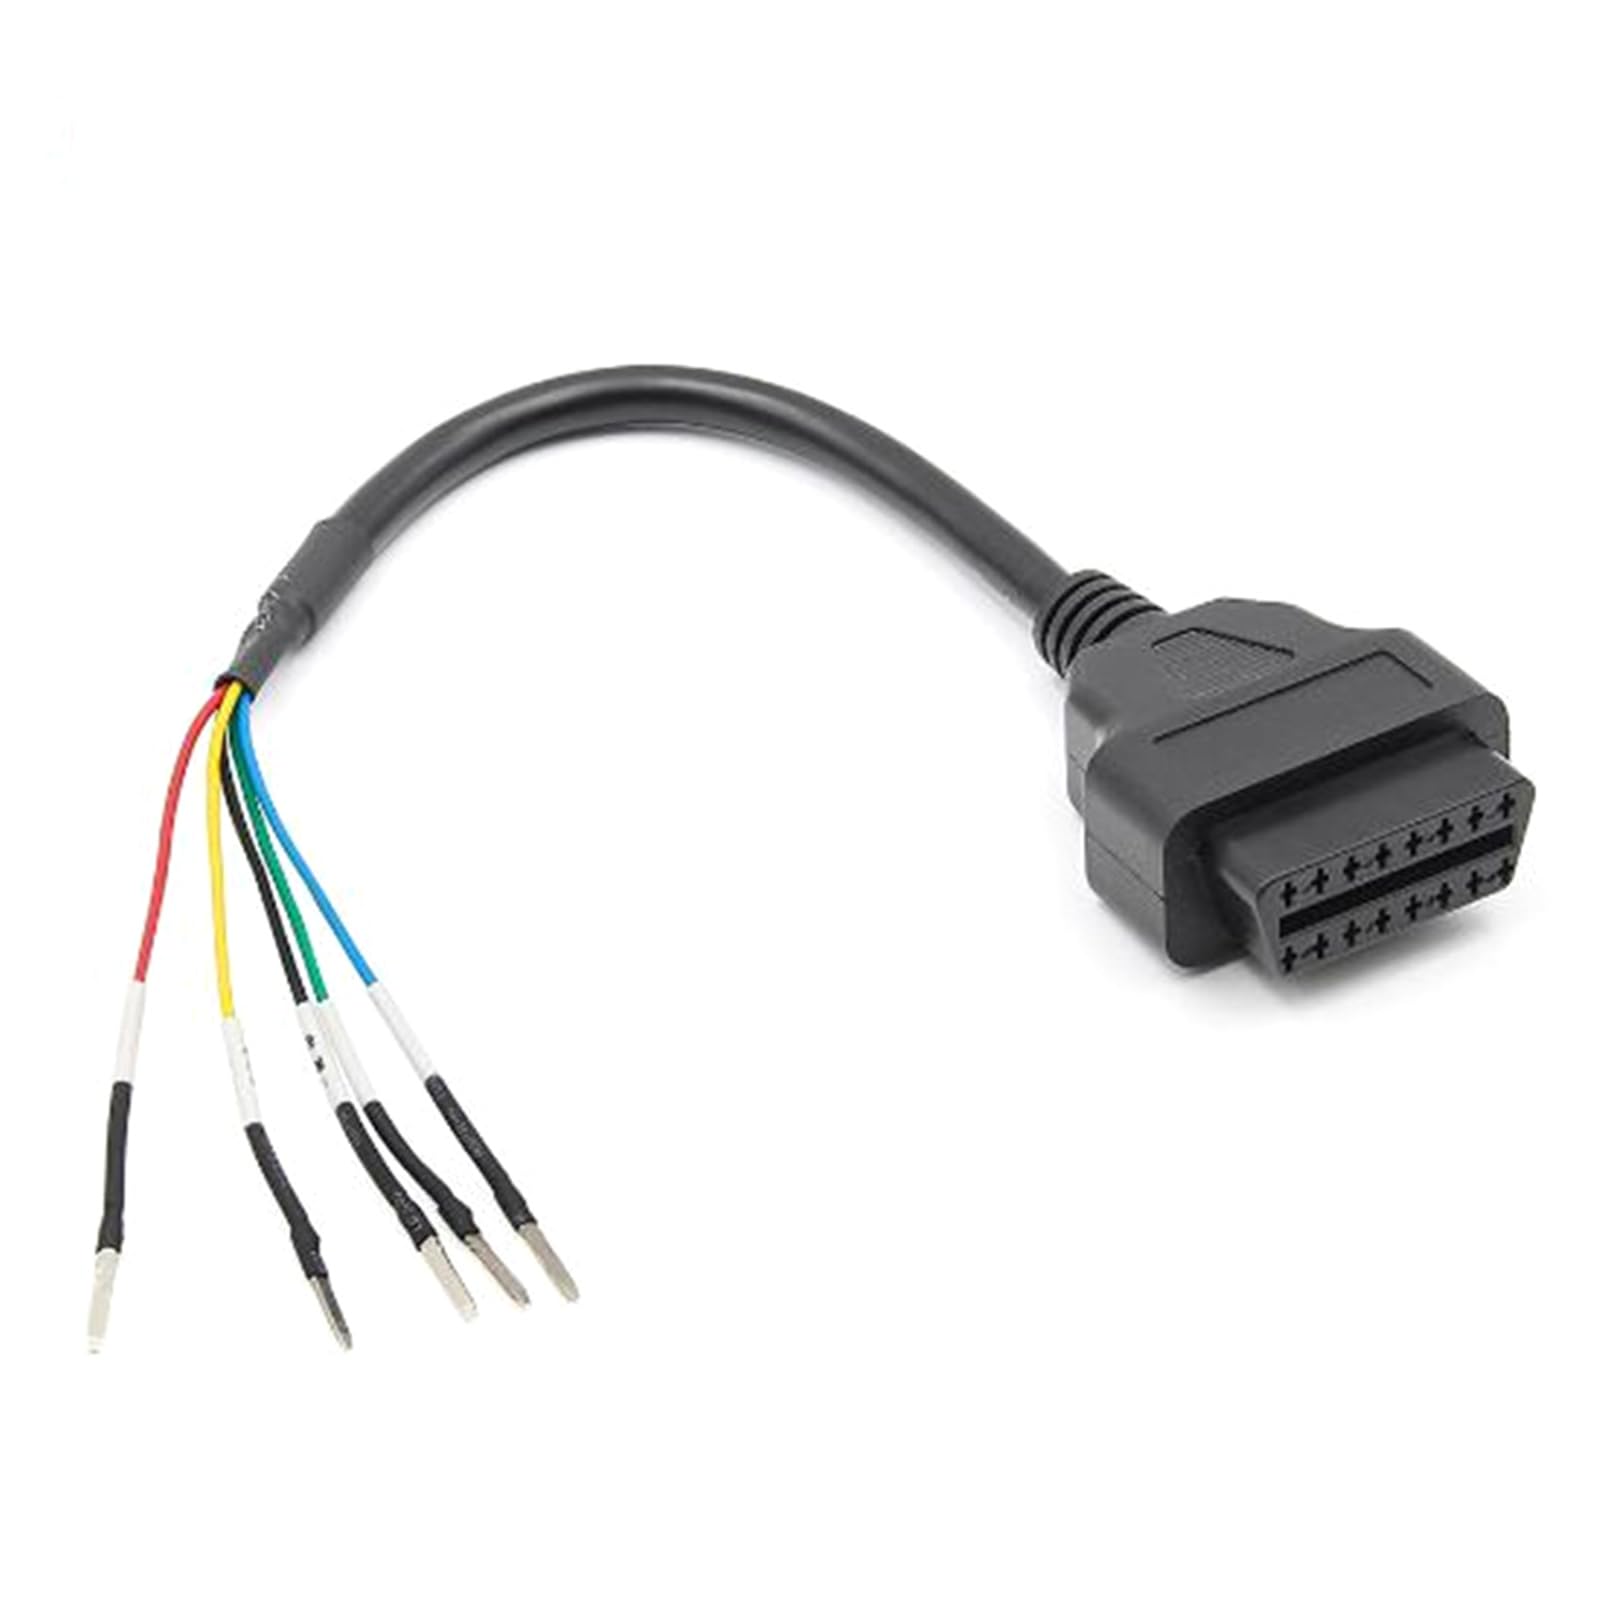 LIbgiubhy K+CAN OBD2 Kabel Tester Connector Diagnosekabel für LKW 16pin Stecker OBD OBD2 Buchse Can Line von LIbgiubhy